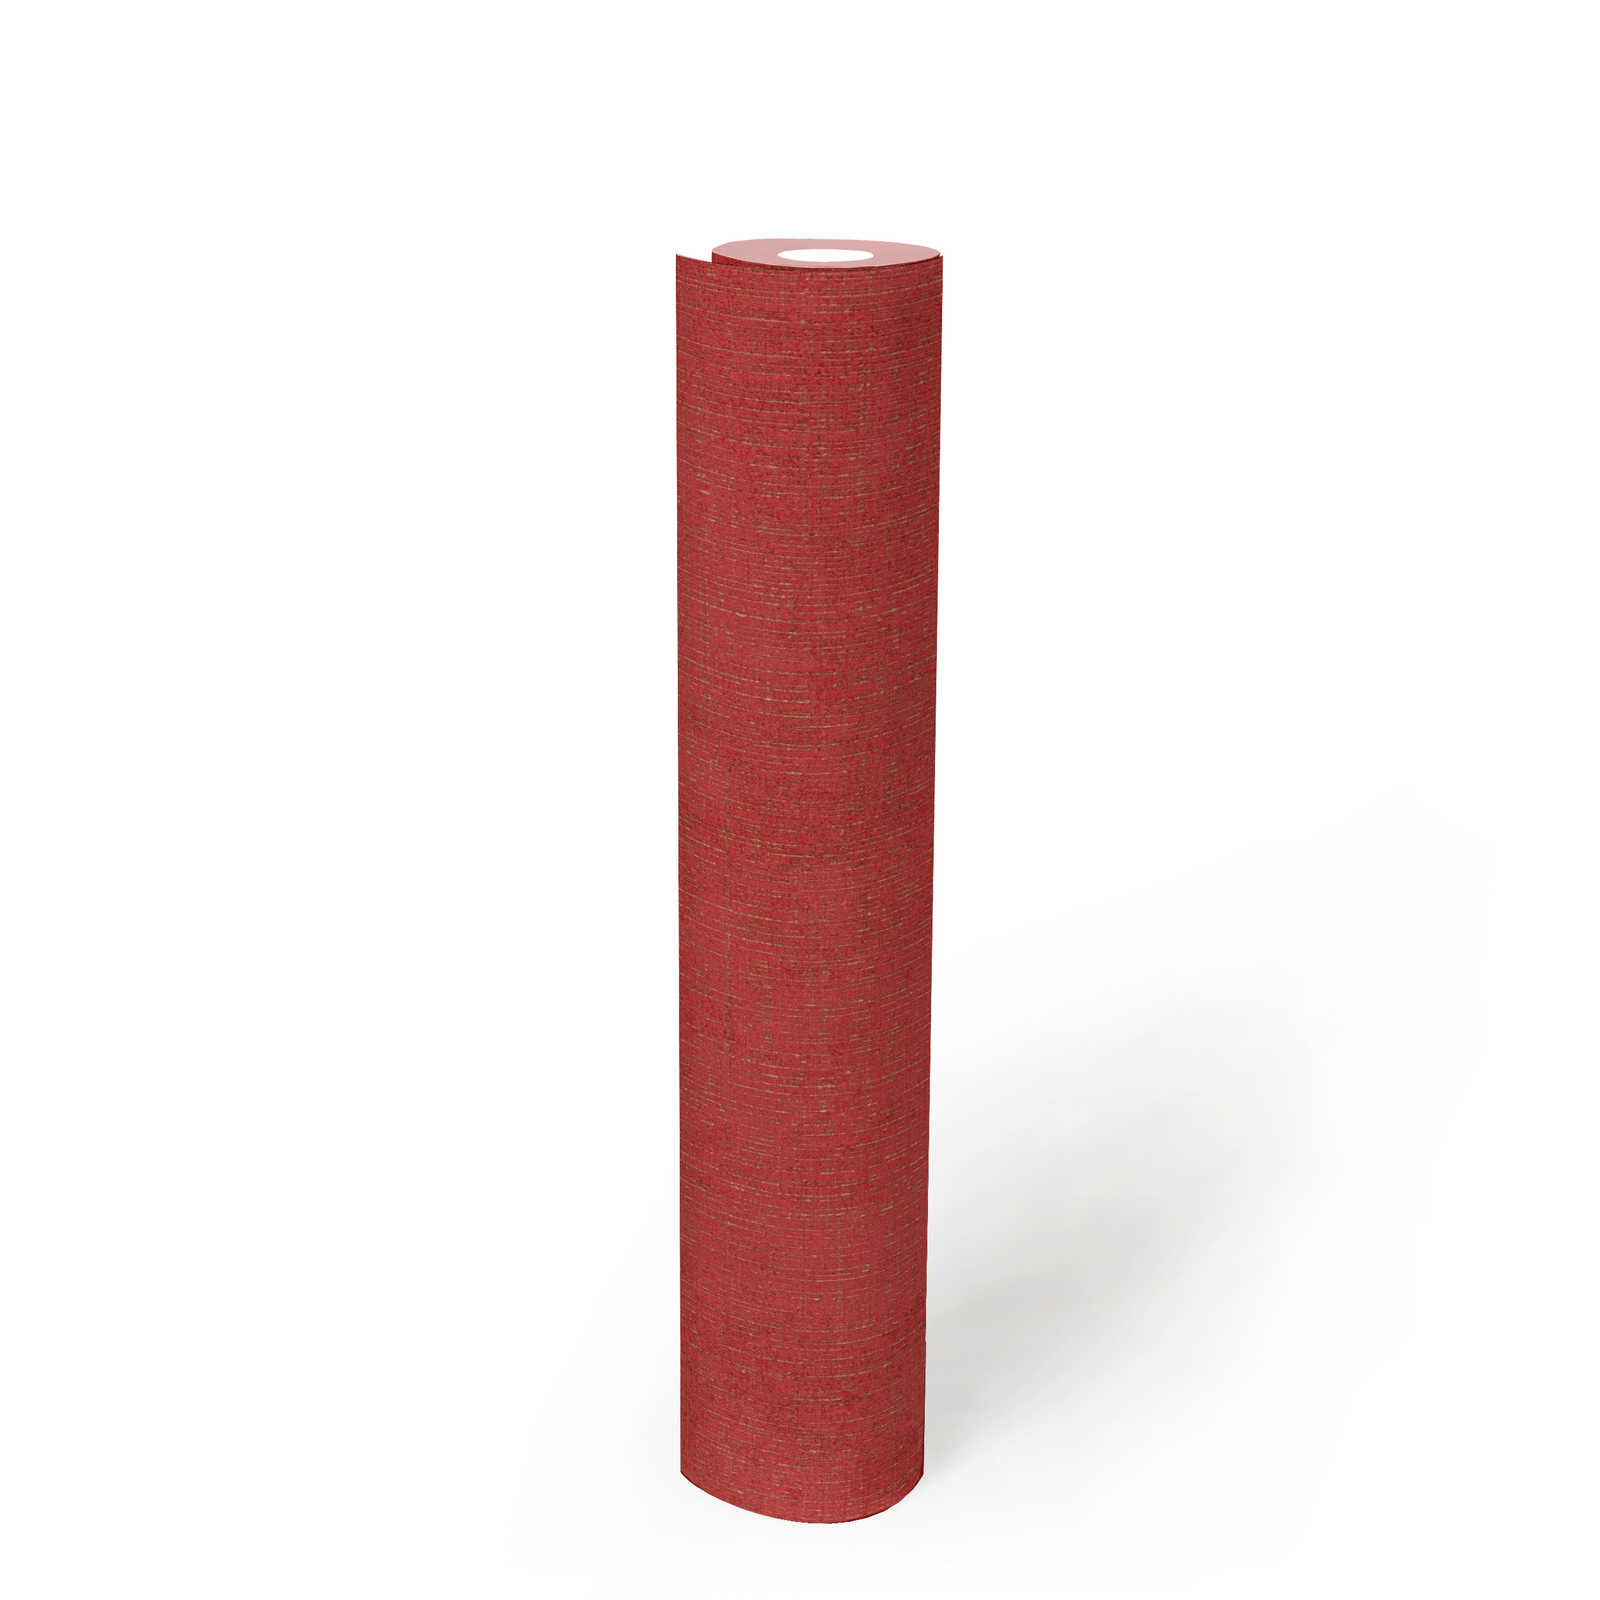             Rote Tapete golden Meliert mit Textiloptik – Metallic, Rot
        